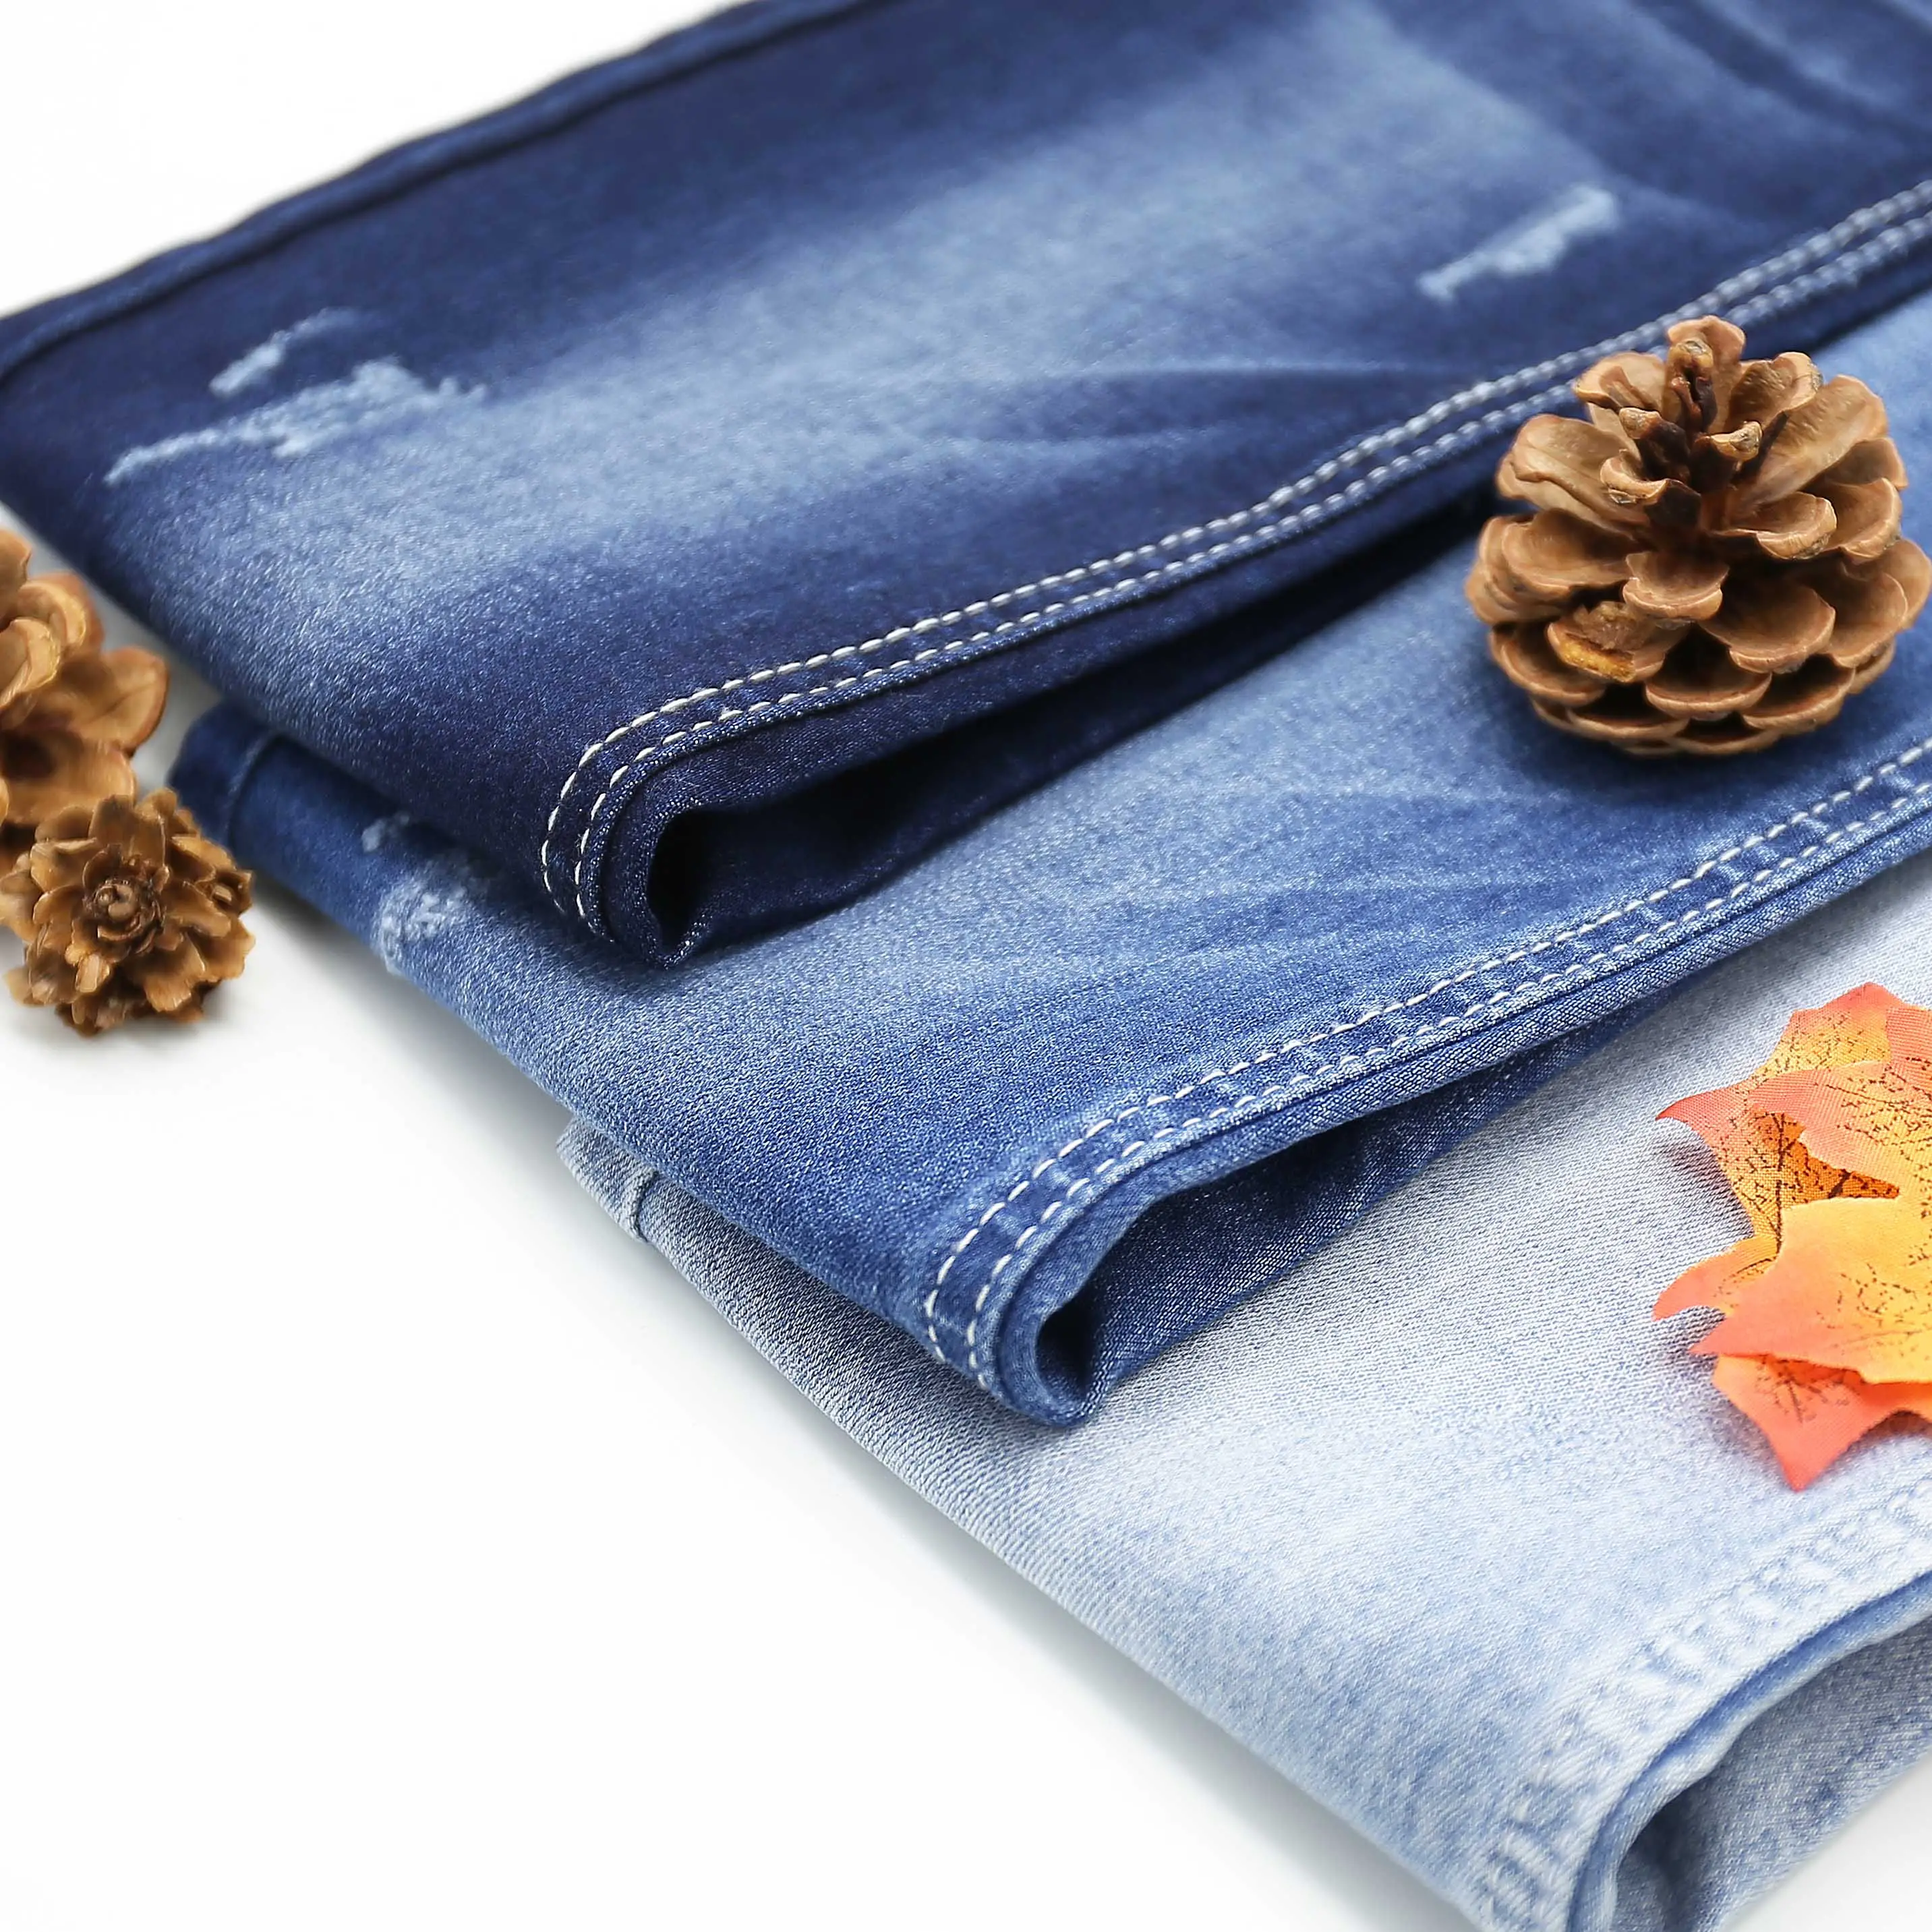 Zhonghui haute qualité denim jeans denim tissu extensible jeans coton tissu